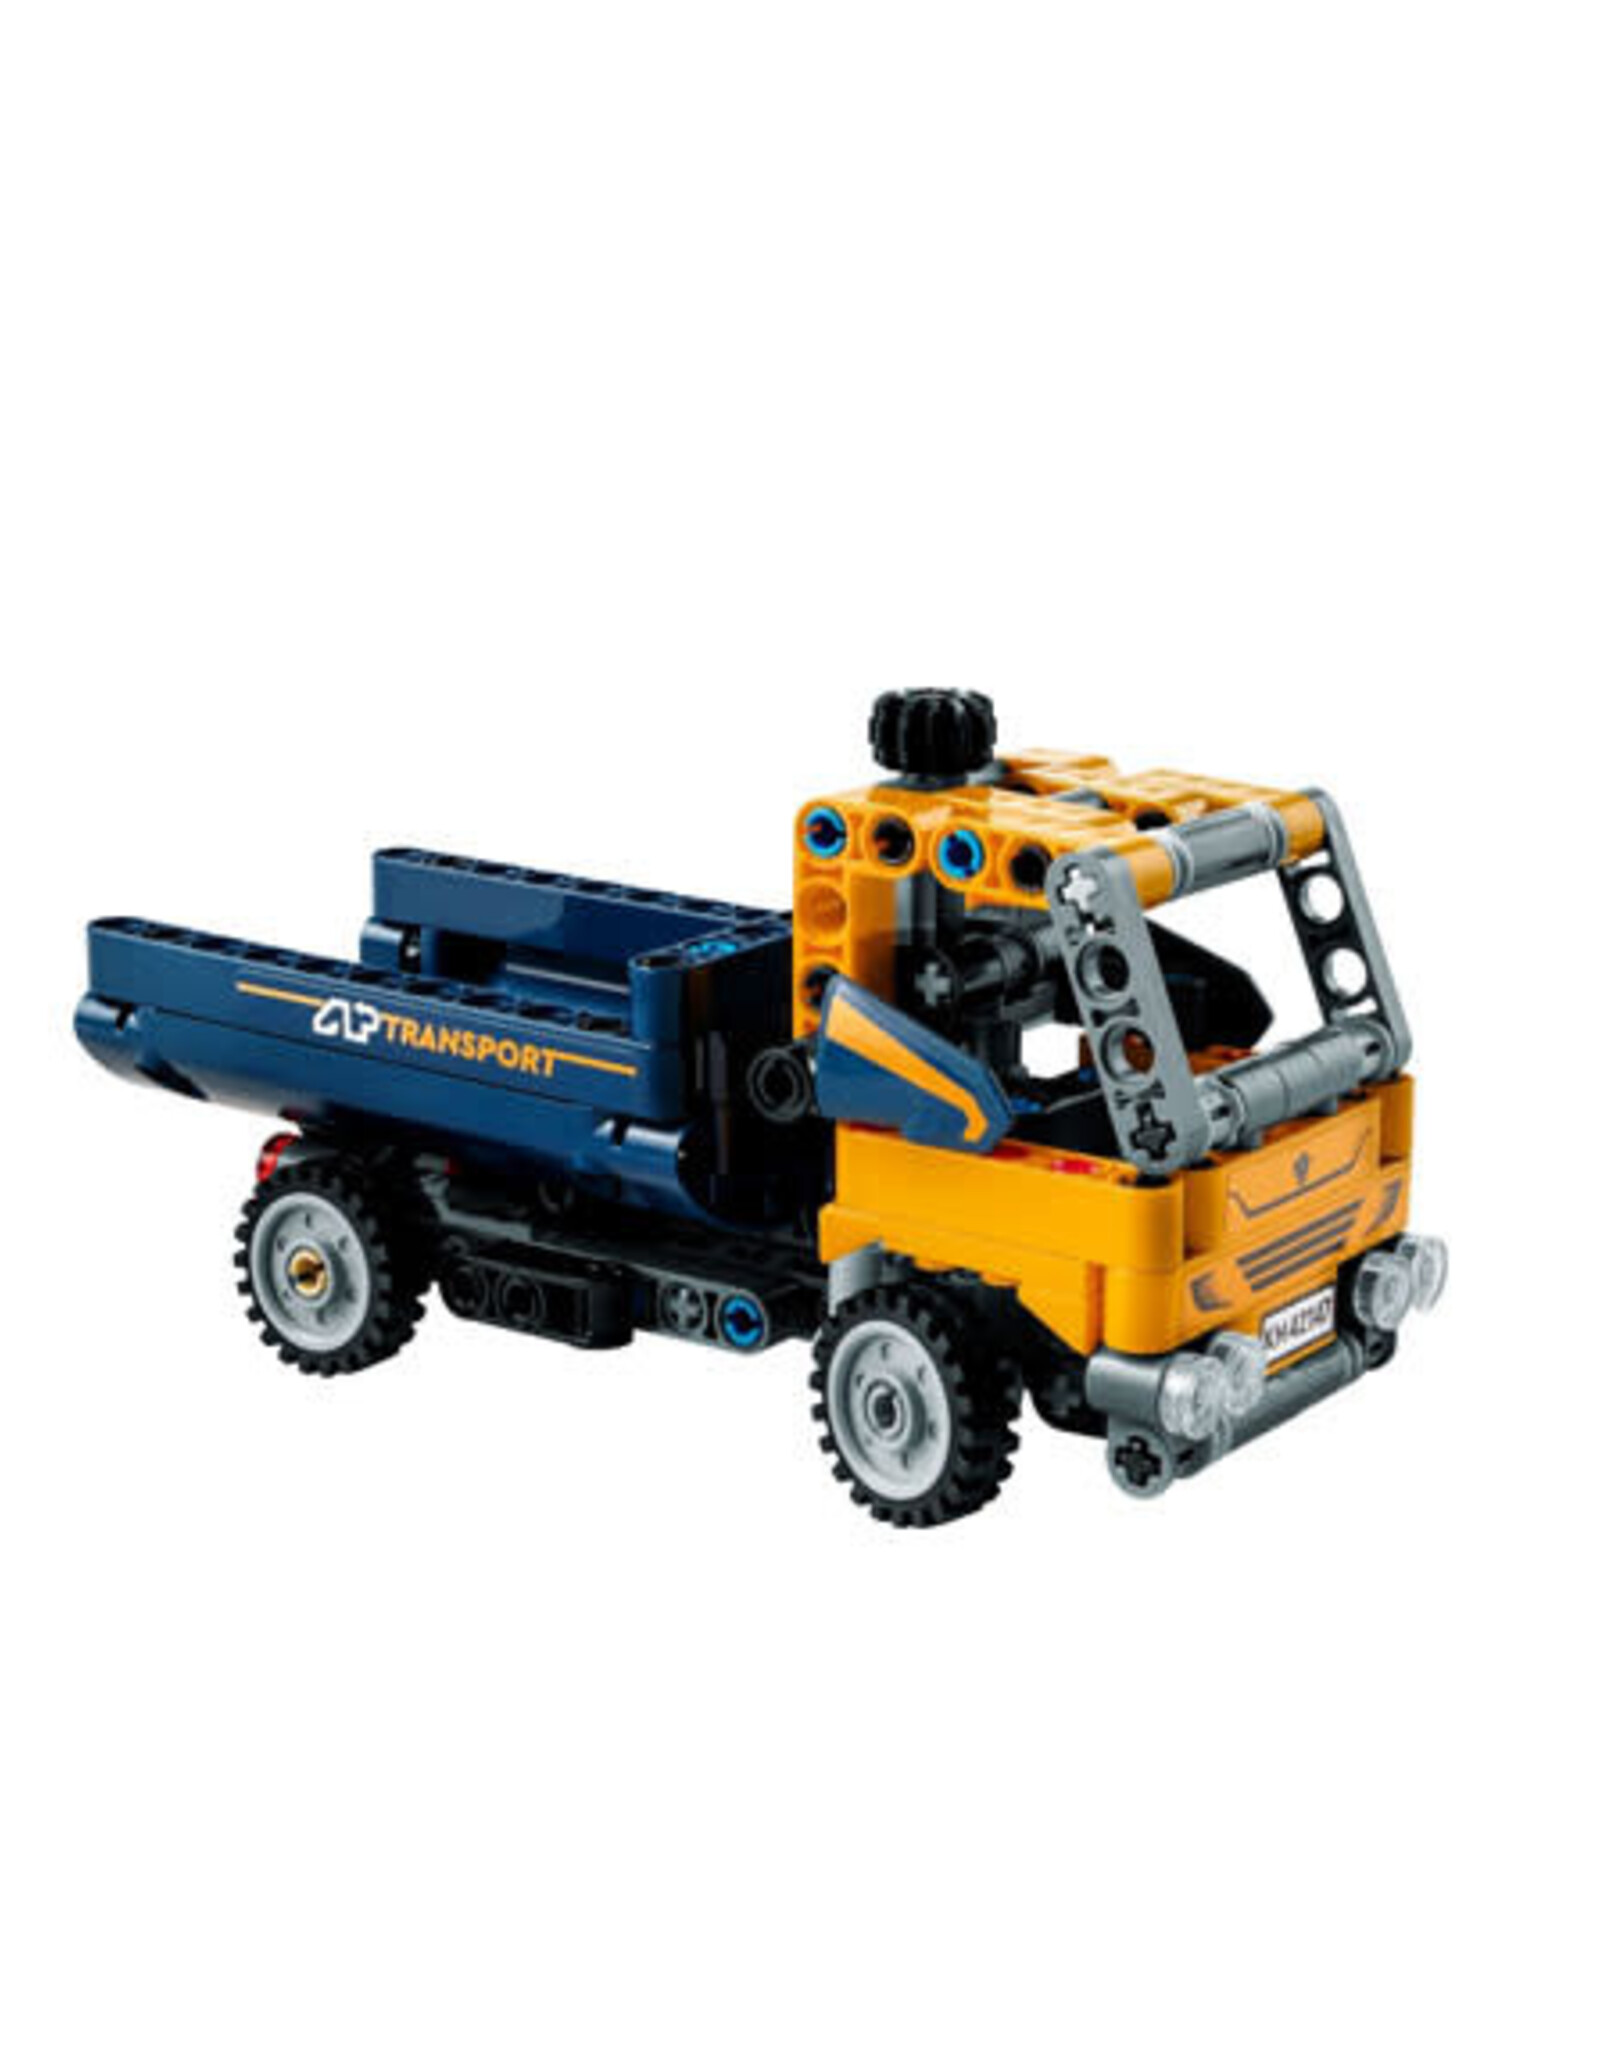 LEGO LEGO 42147 Dump Truck  TECHNIC